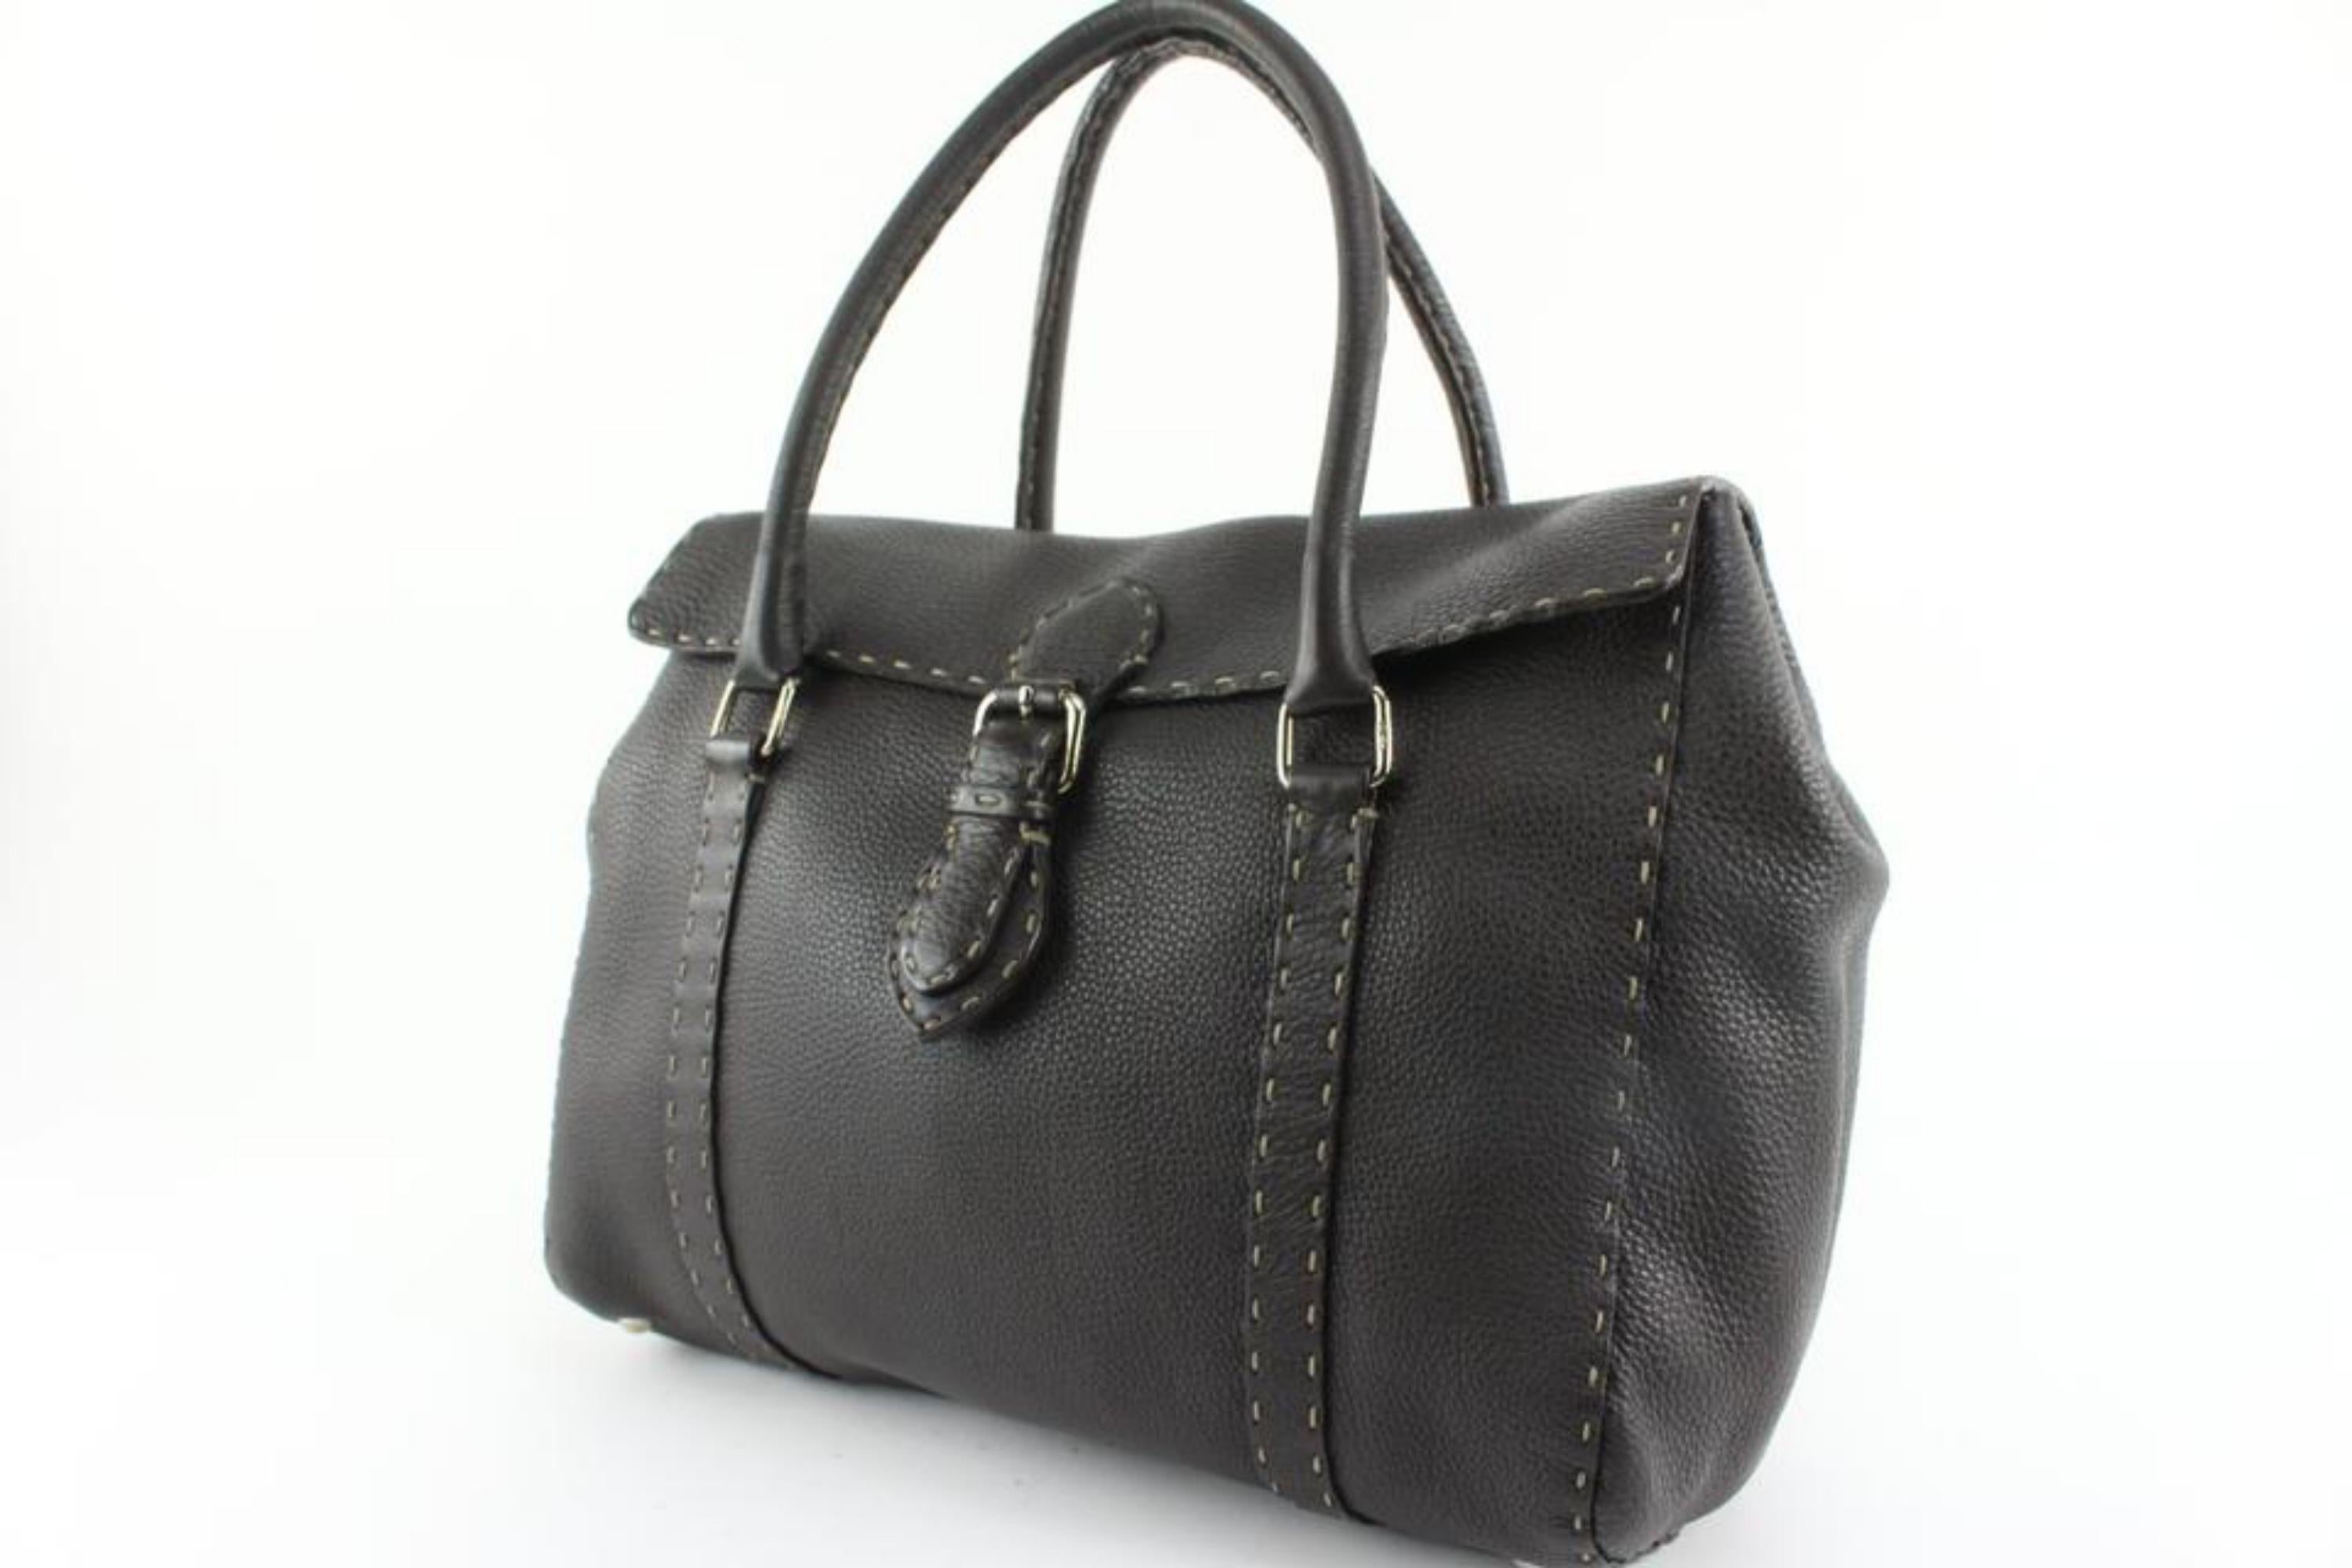 Fendi Dark Brown Selleria Leather Linda Shoulder Satchel Bag 1221f19
Date Code/Serial Number: 2454-8BR388-NDU-048
Made In: Italy
Measurements: Length:  13.5